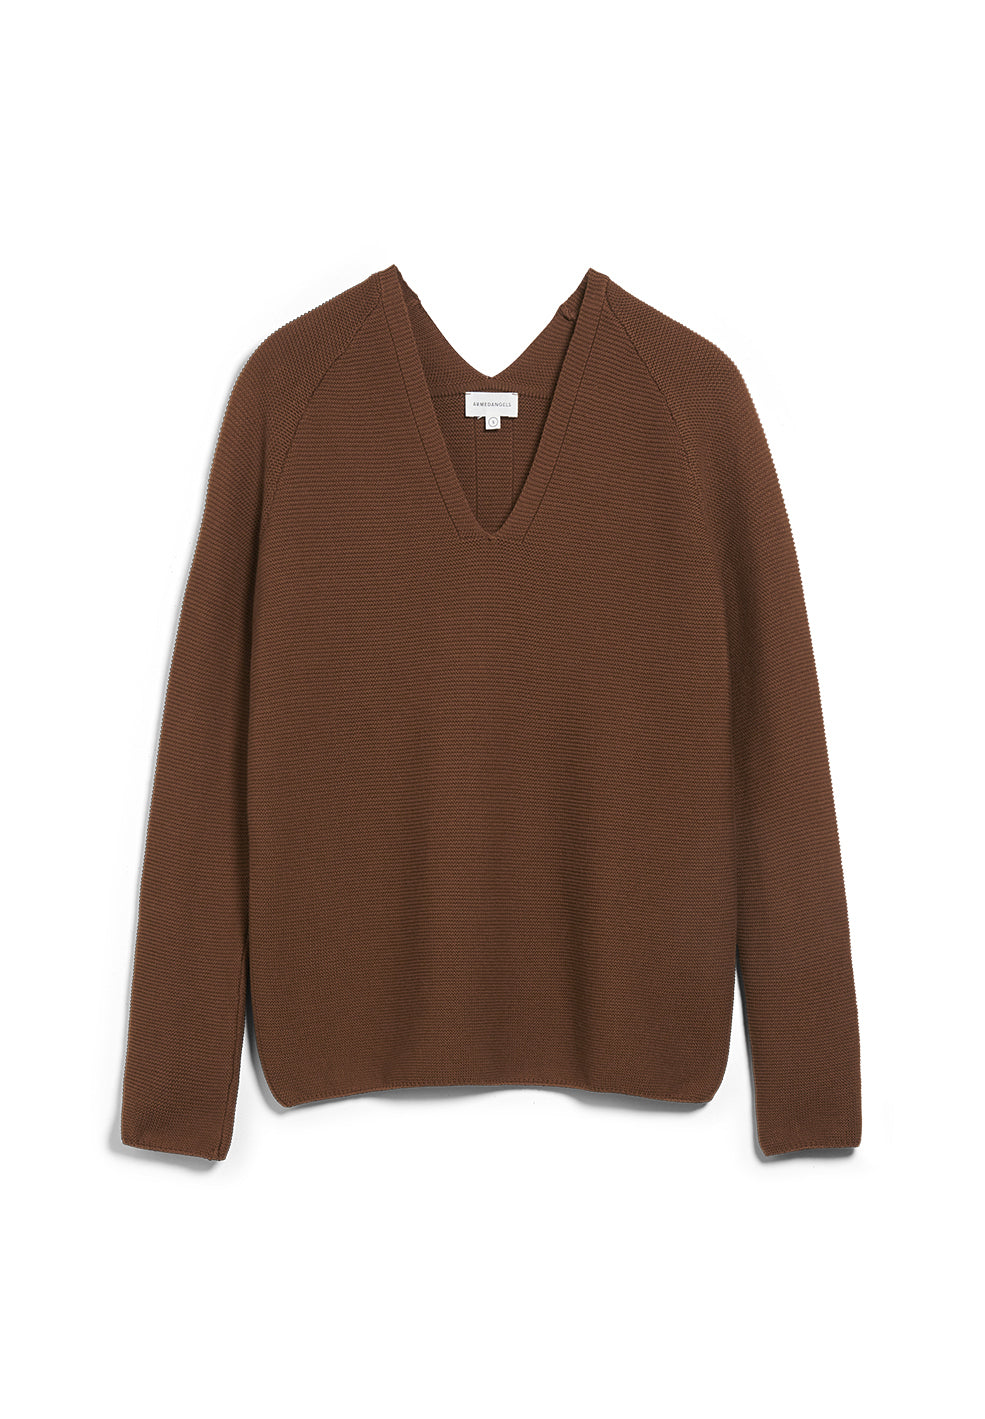 Faarina Black Knitted Sweater in Organic Cotton